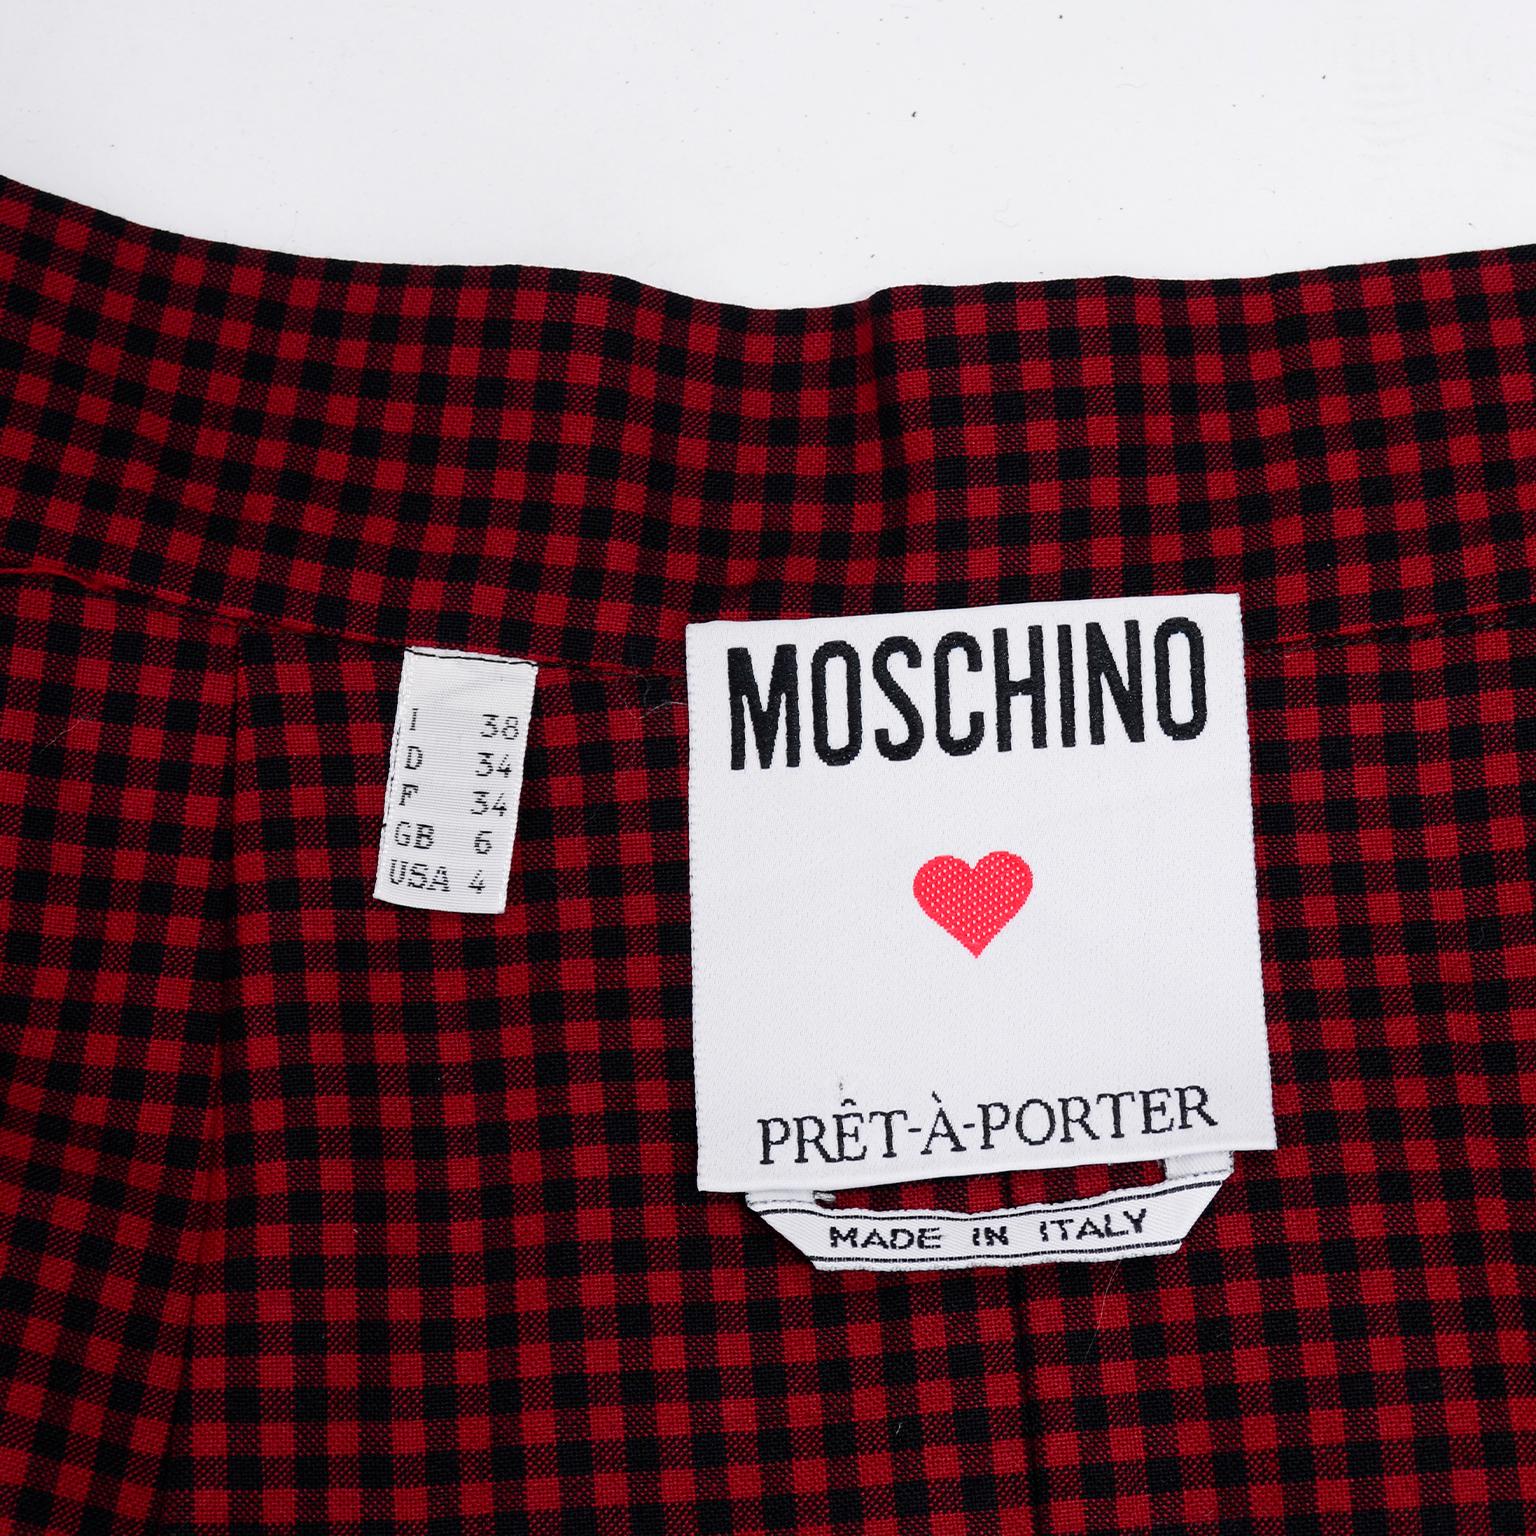 Vintage Franco Moschino Pret a Porter Nautical Print Skirt w/ Fans & Vines 7